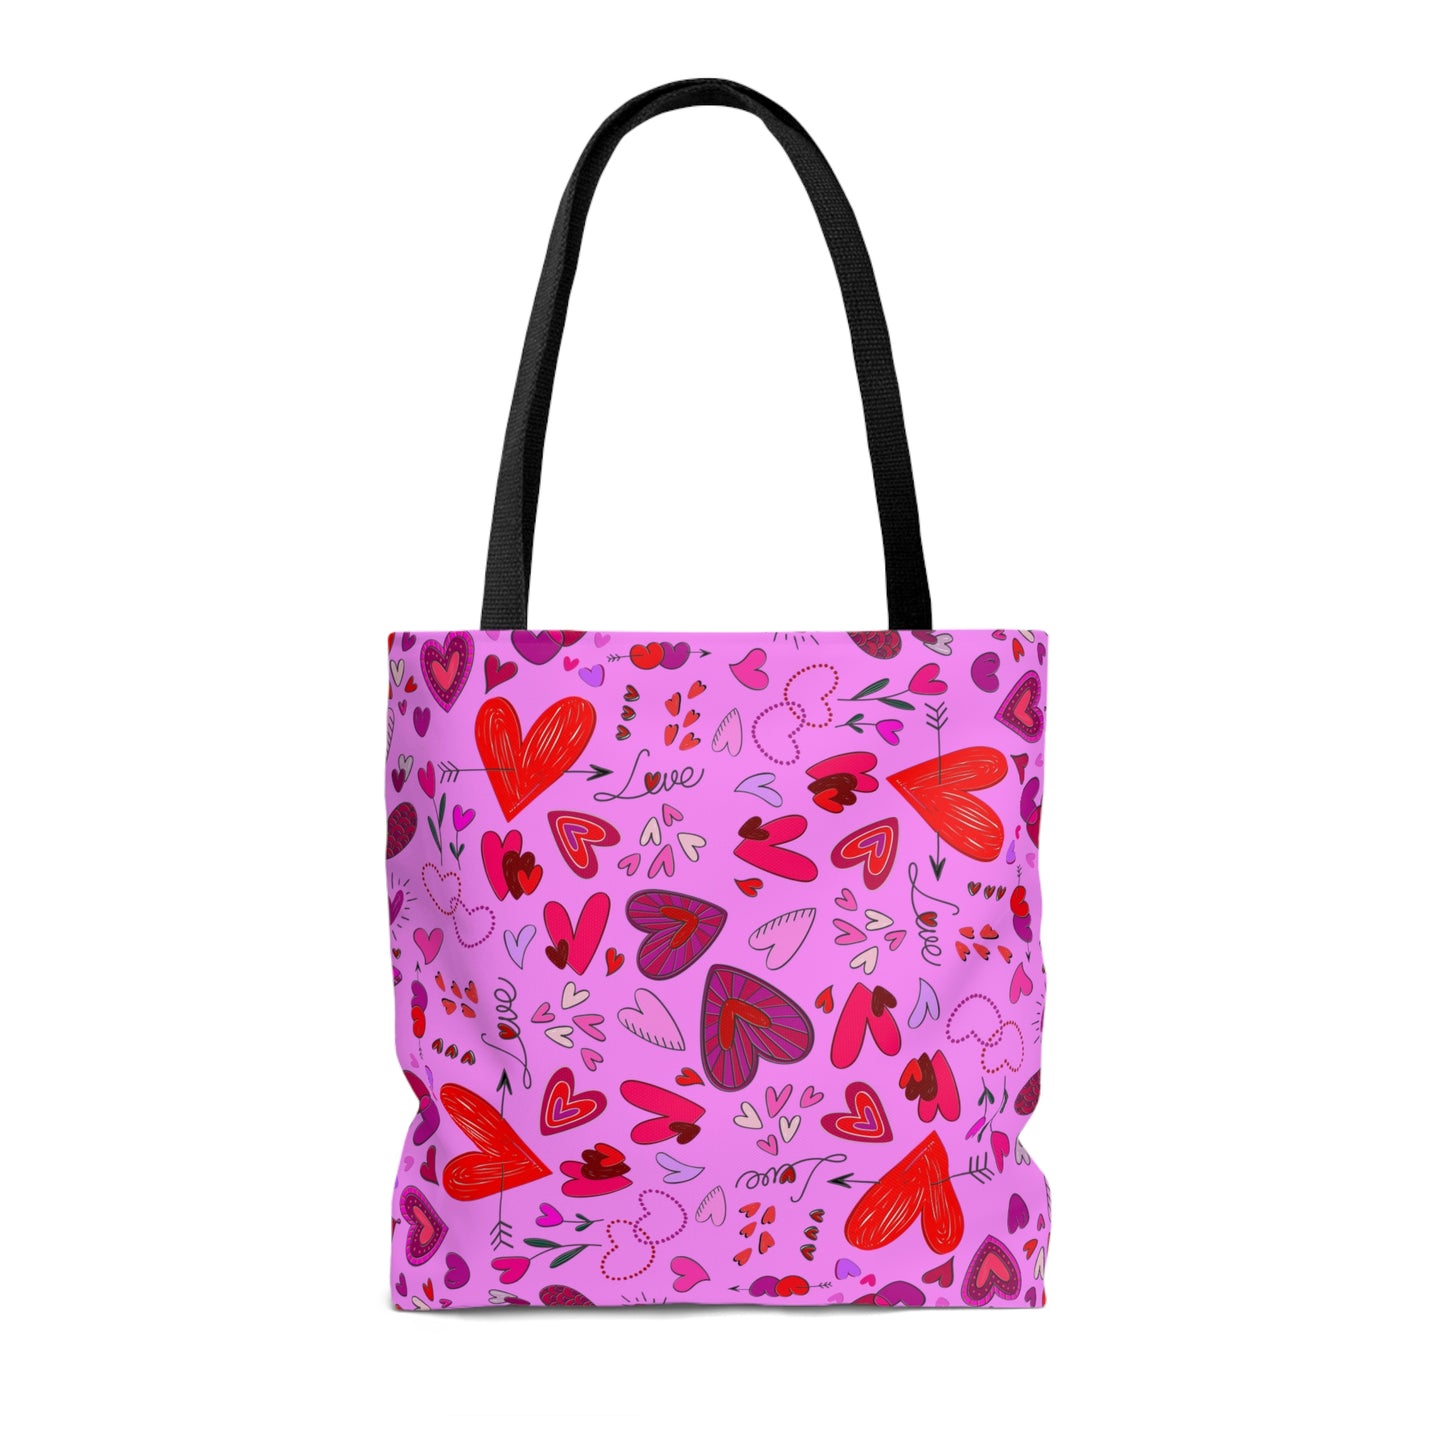 Heart Doodles - Fuschia Pink ff8eff - Tote Bag